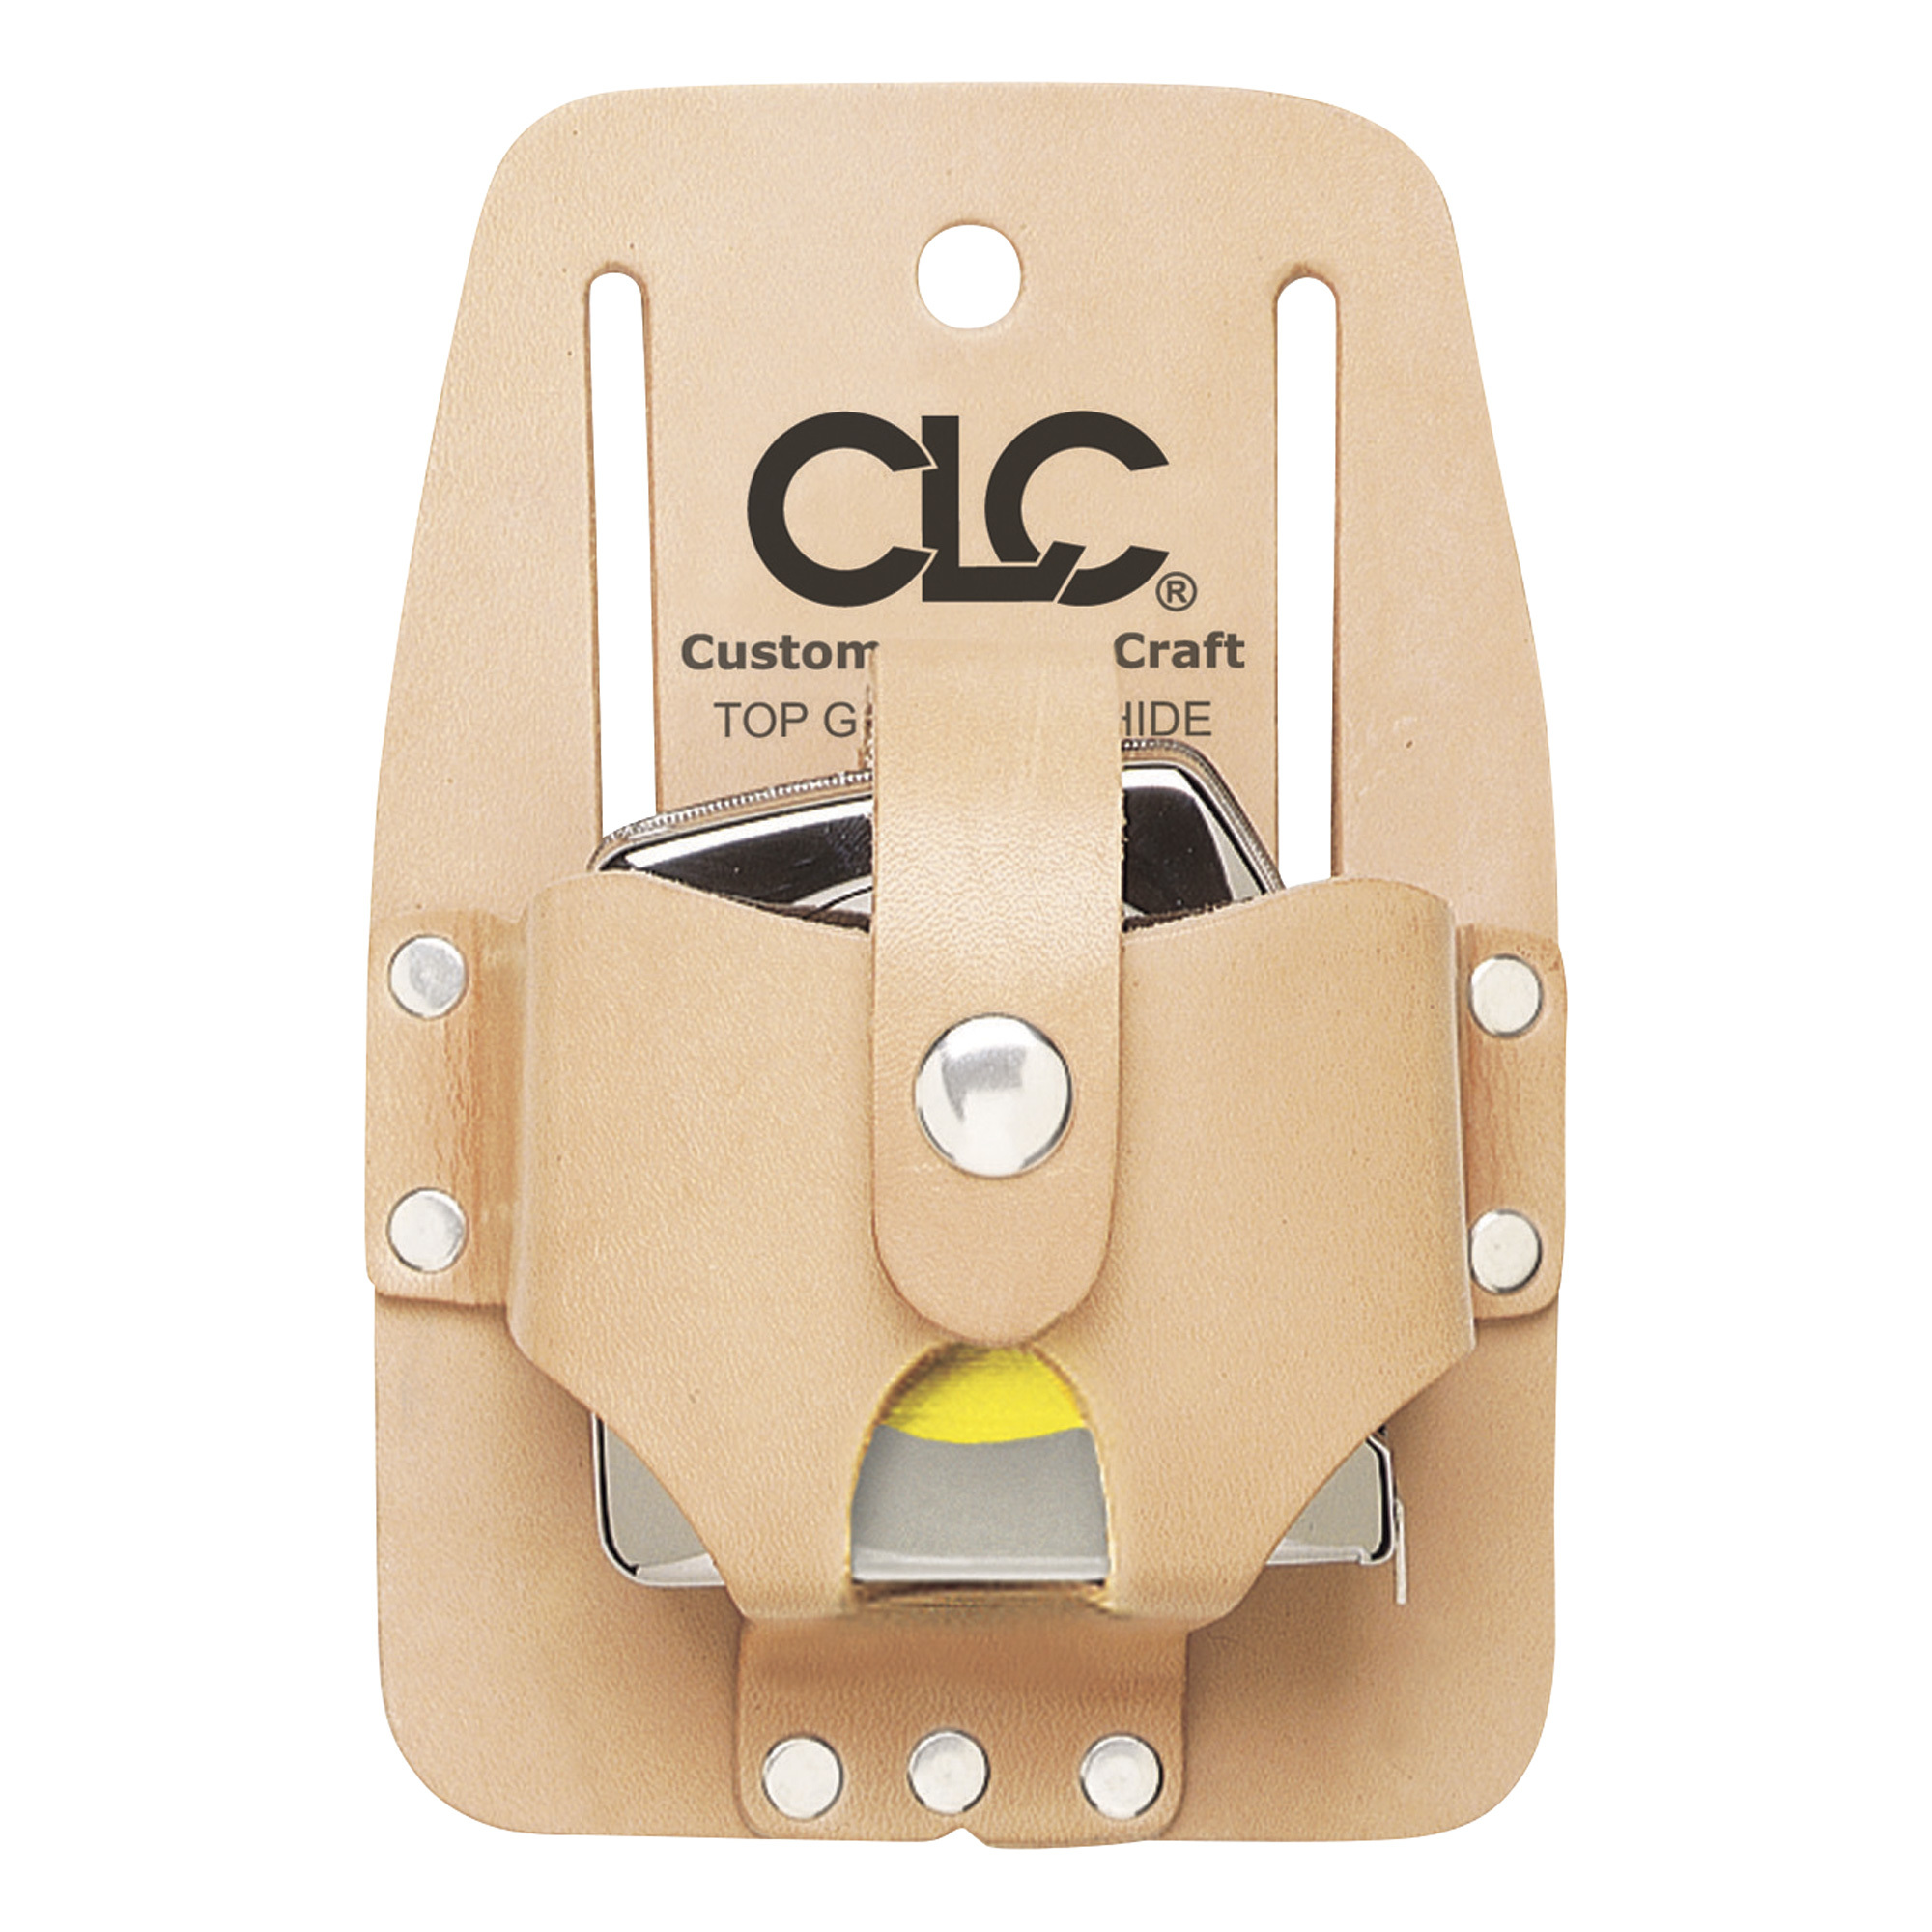 CLC Custom Leathercraft Top-Grain Cowhide Tape Measure Holder â 2 3/4Inch W x 1 1/2Inch D x 2 3/4Inch H Interior, Model 464